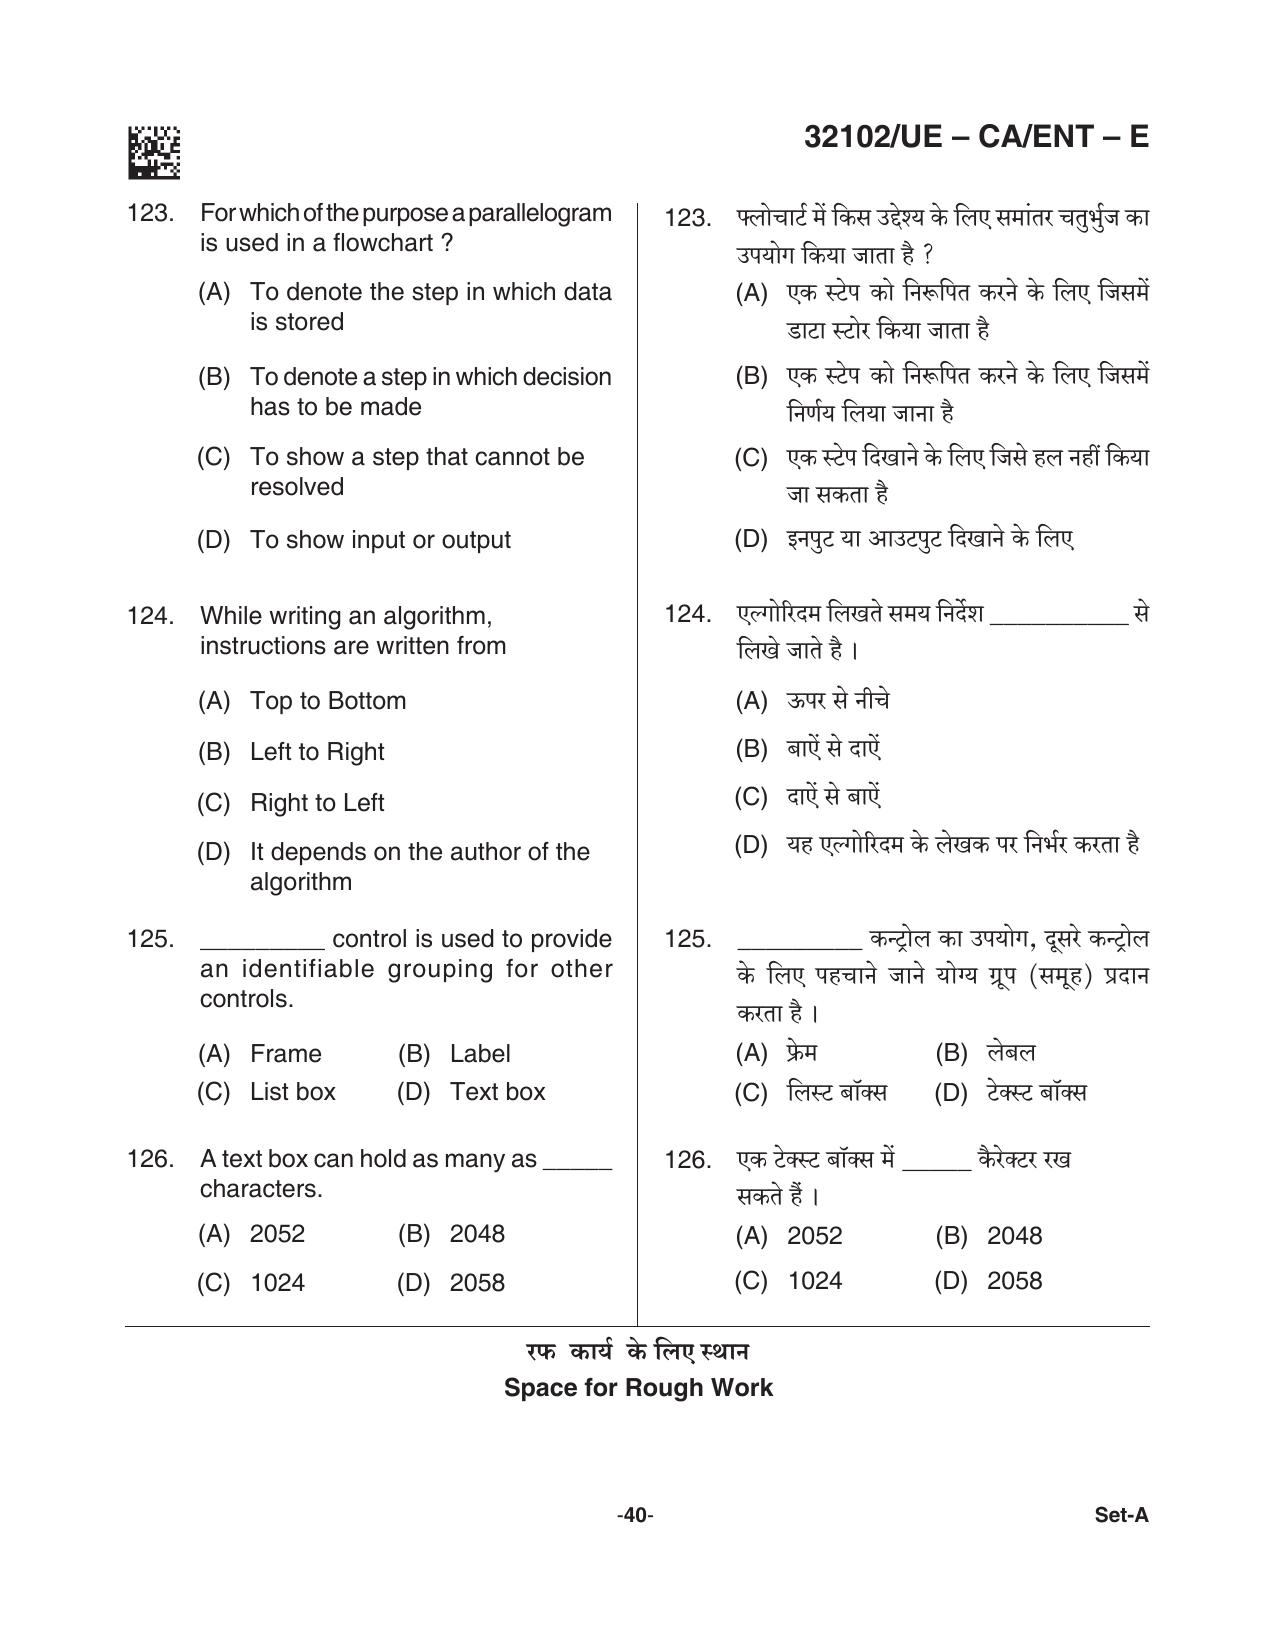 CG Pre MCA 2021 Question Paper - Page 40